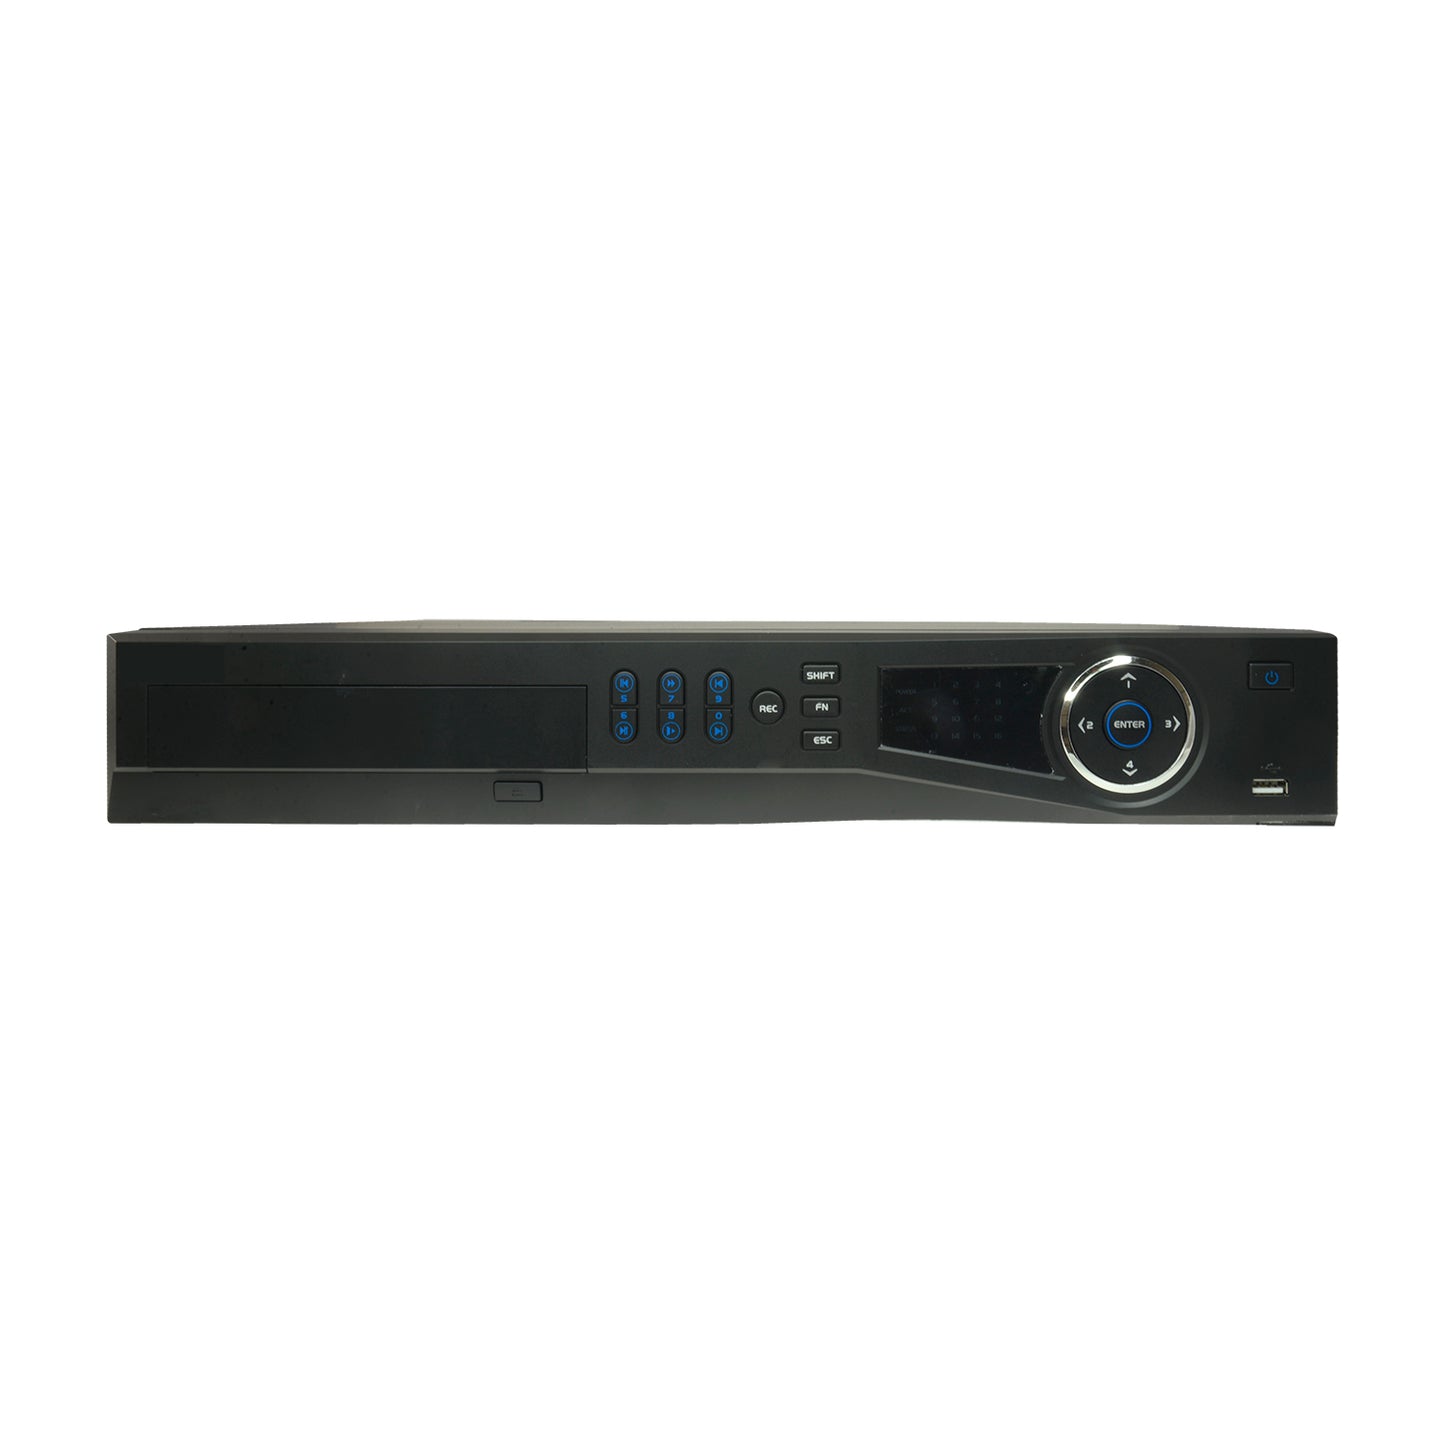 Registratore Universale HDCVI/CVBS/IP - 8 CH video / 8 IP / 4 CH audio - 1080P (25FPS) - Input / Output Allarmi - Uscita BNC, VGA e HDMI Full HD - Ammette 4 hard disk